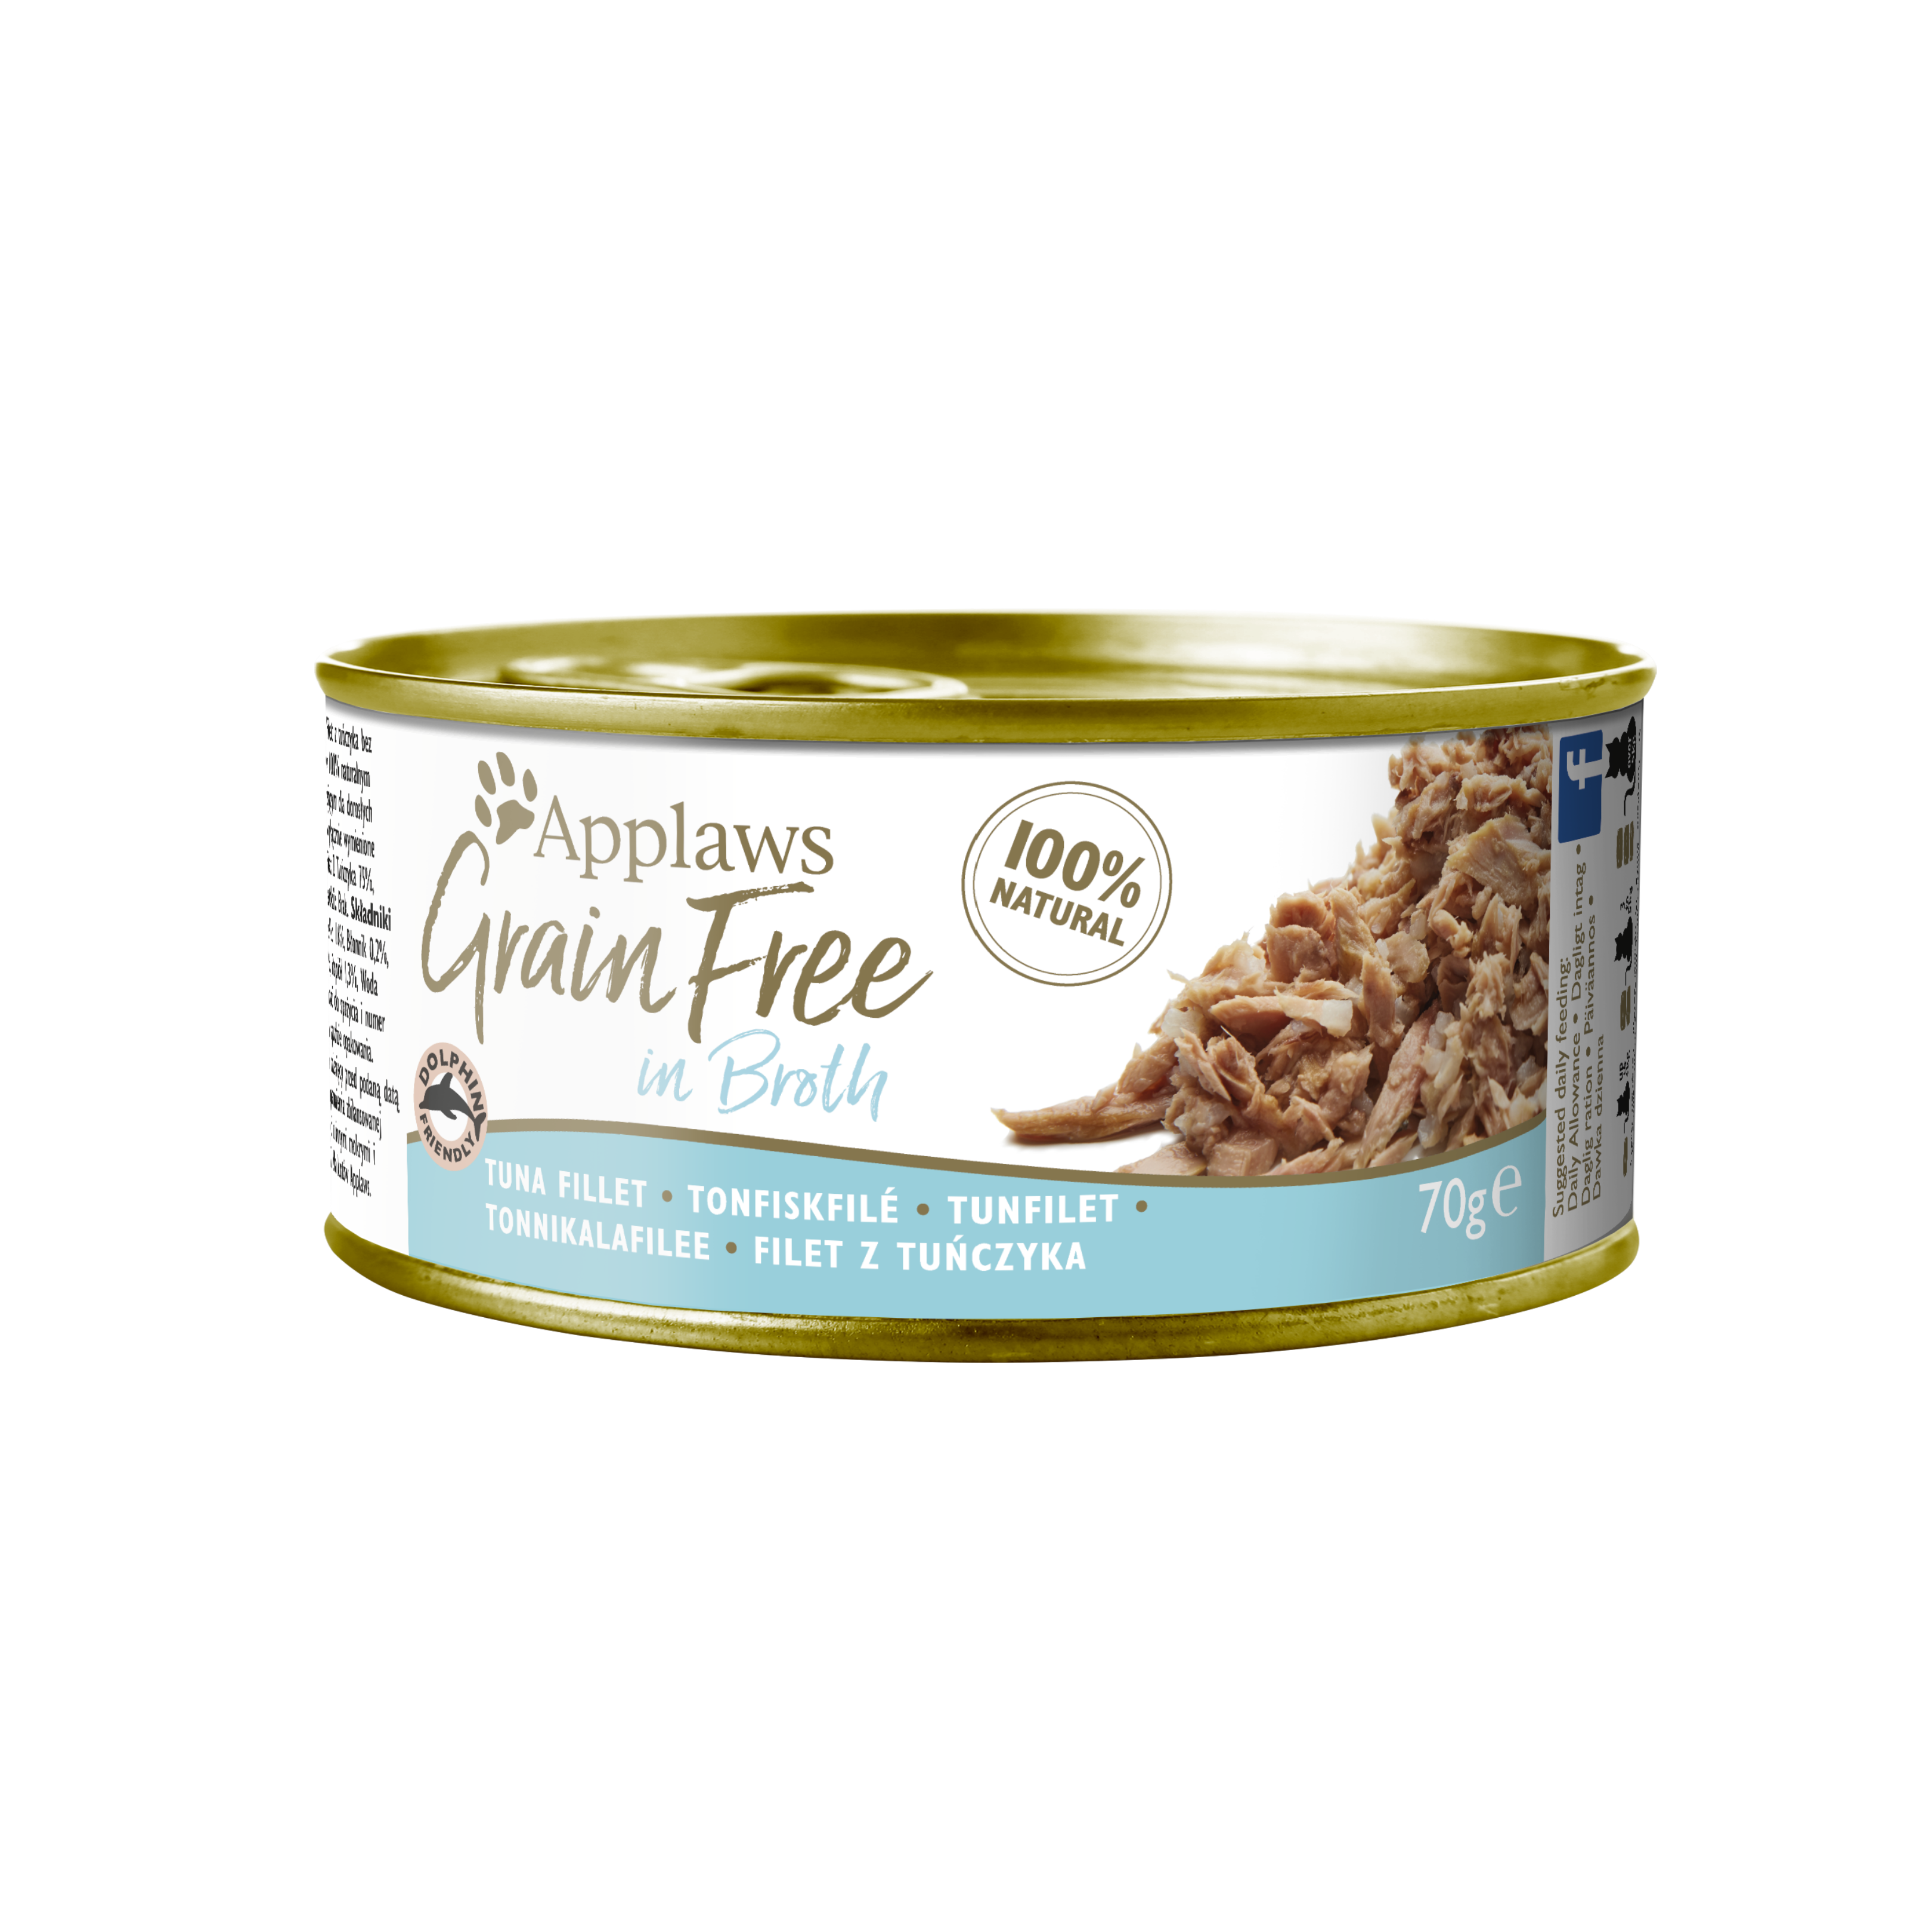 無穀物肉湯系列 – 吞拿魚&魚湯  (6罐) Grain Free Cat Tin – Tuna Fillet in Broth